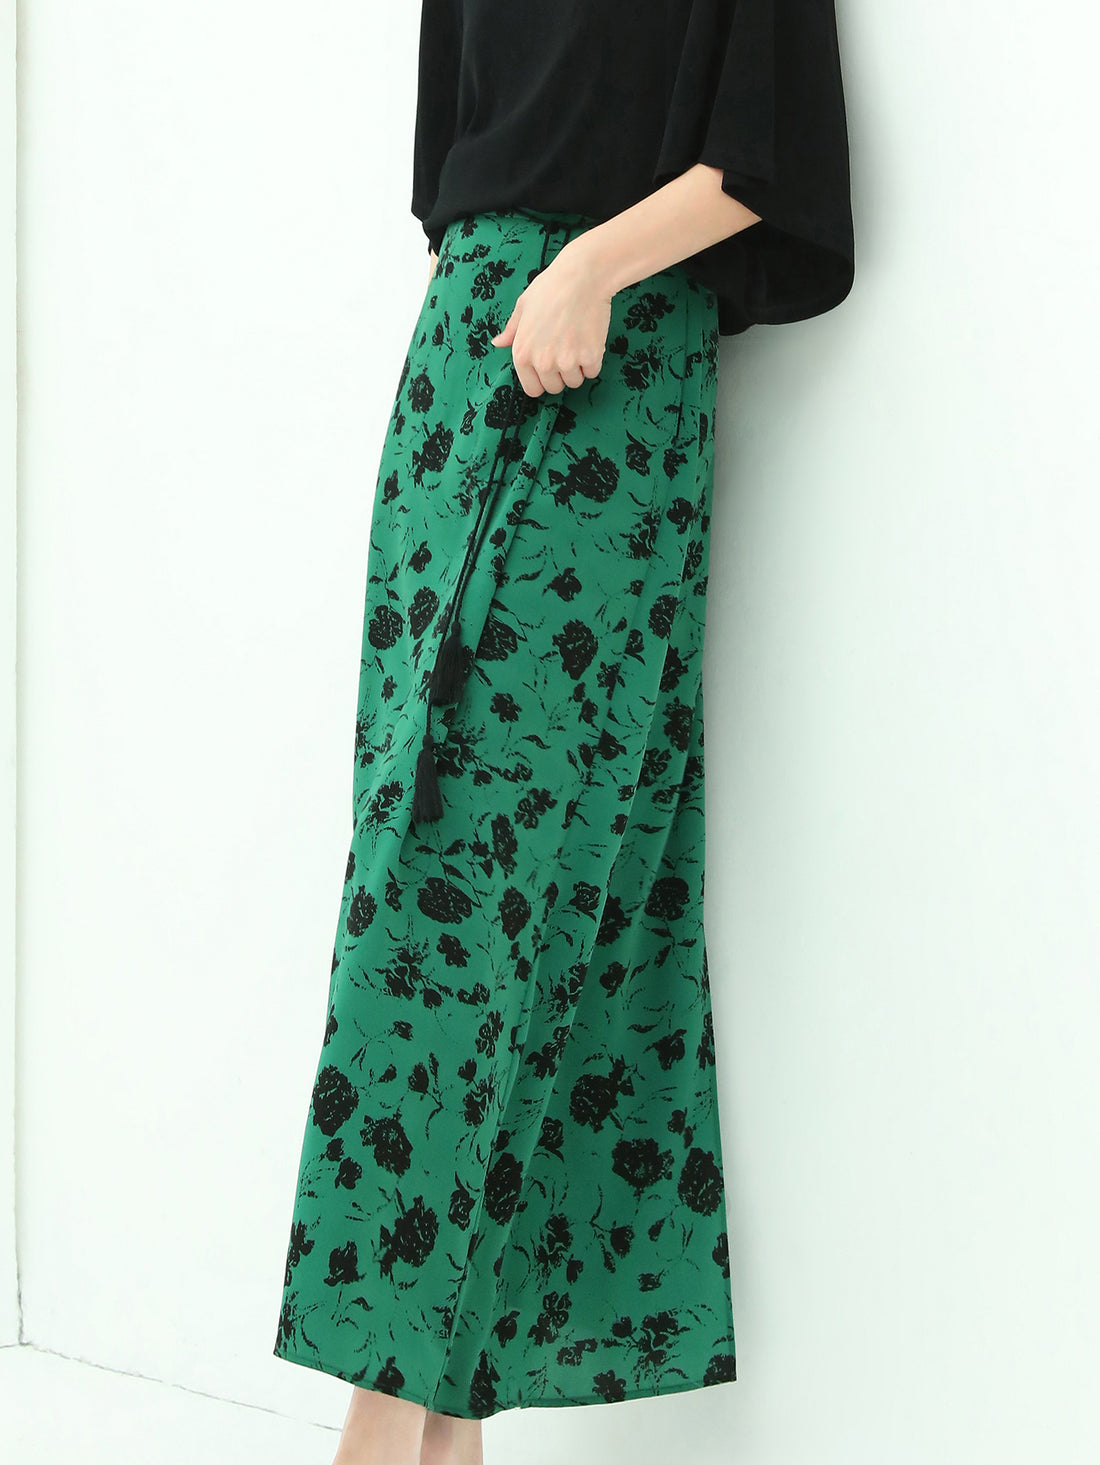 floral-green-and-black-high-waist-midi-skirt_all_green_1.jpg